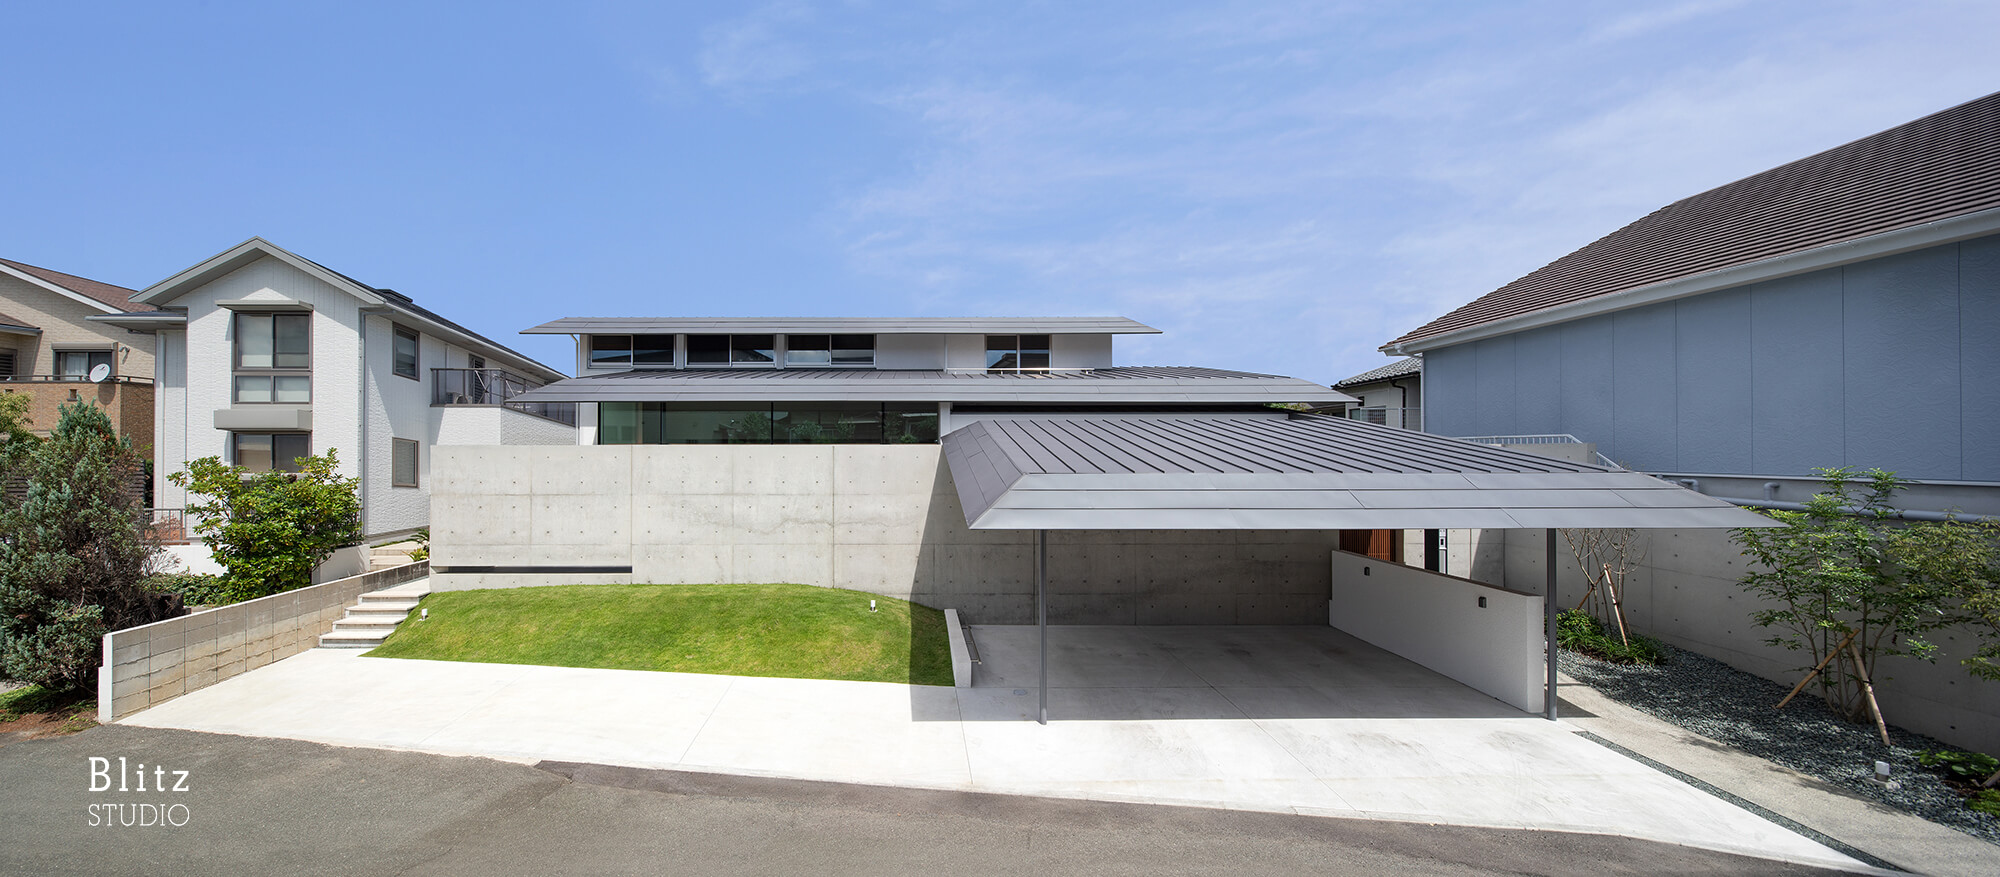 『SA House』-熊本県熊本市-建築写真・竣工写真・インテリア写真2